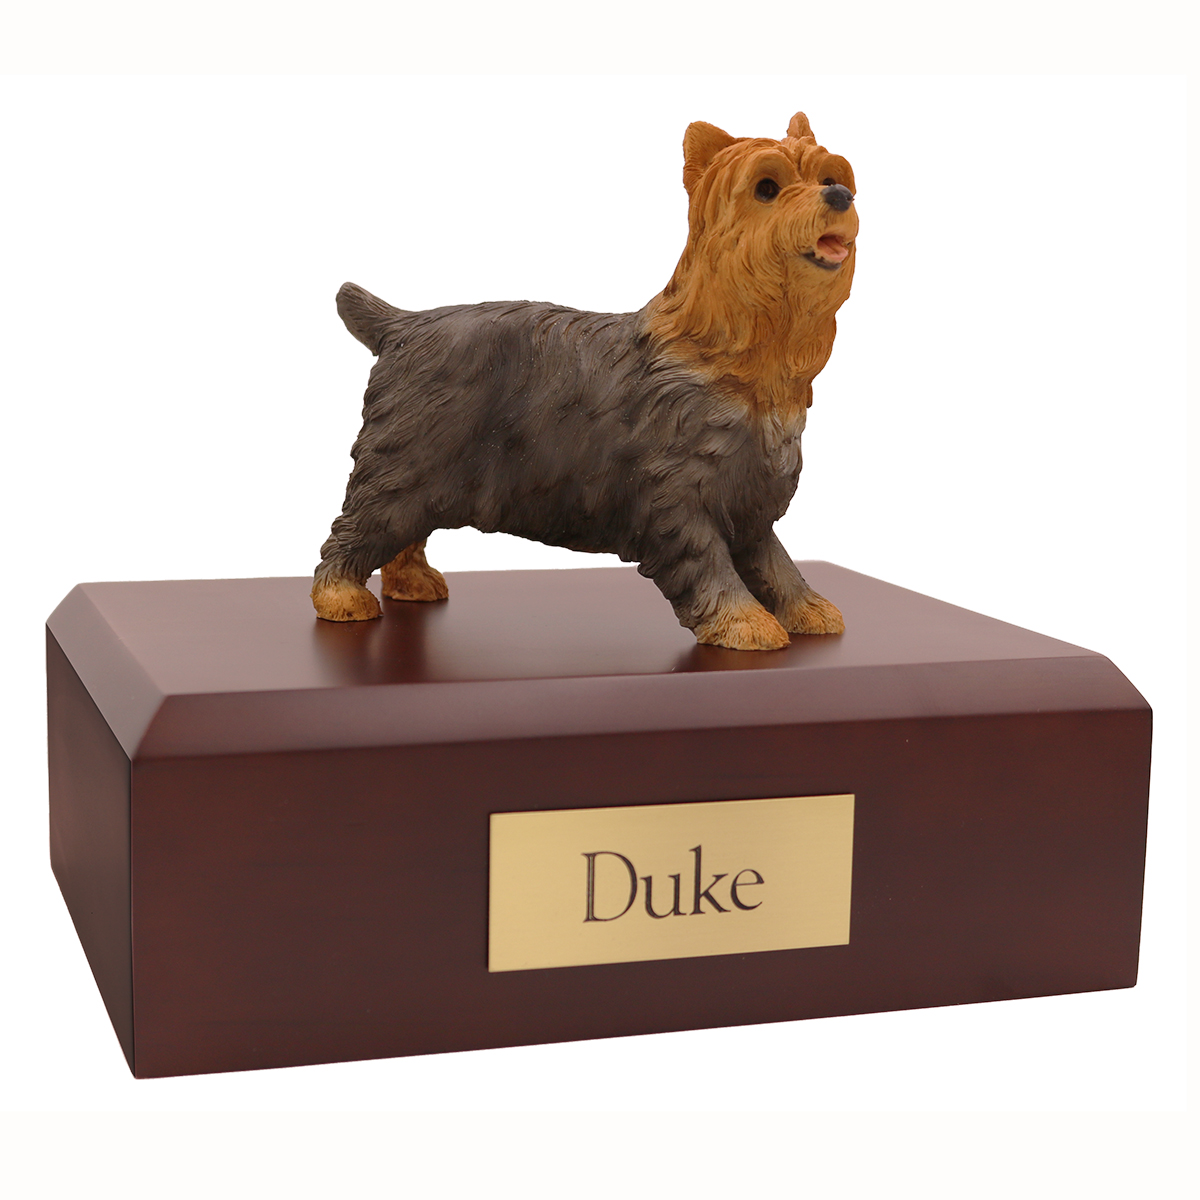 Dog, Yorkshire Terrier, Standing - Figurine Urn